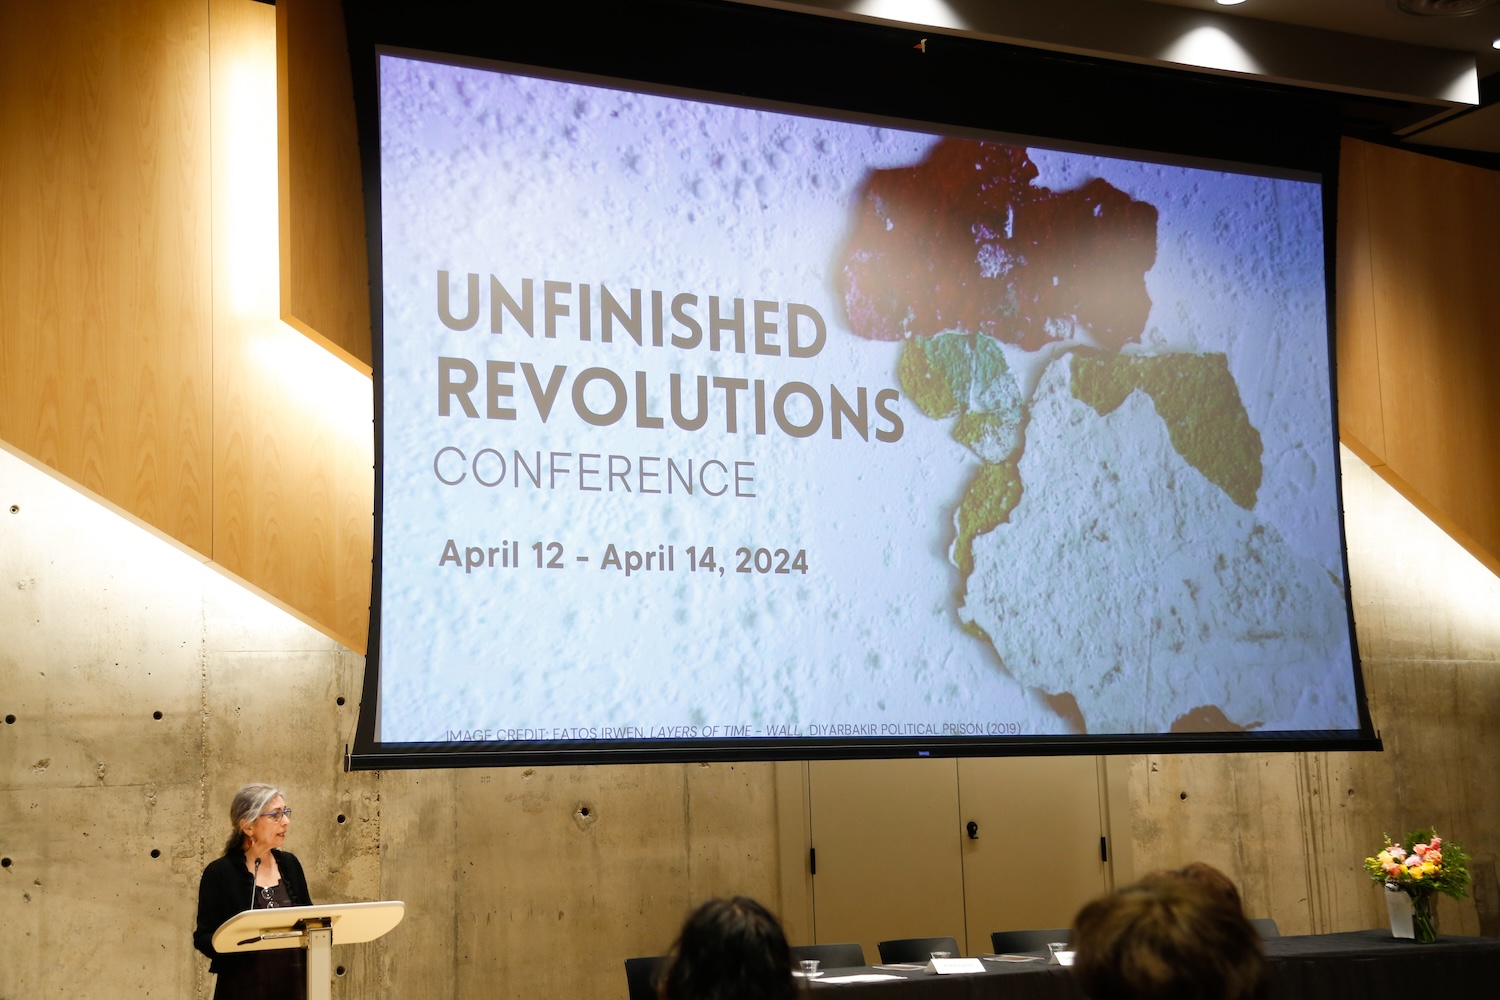 Unfinished Revolutions Conference | April 12-14, 2024